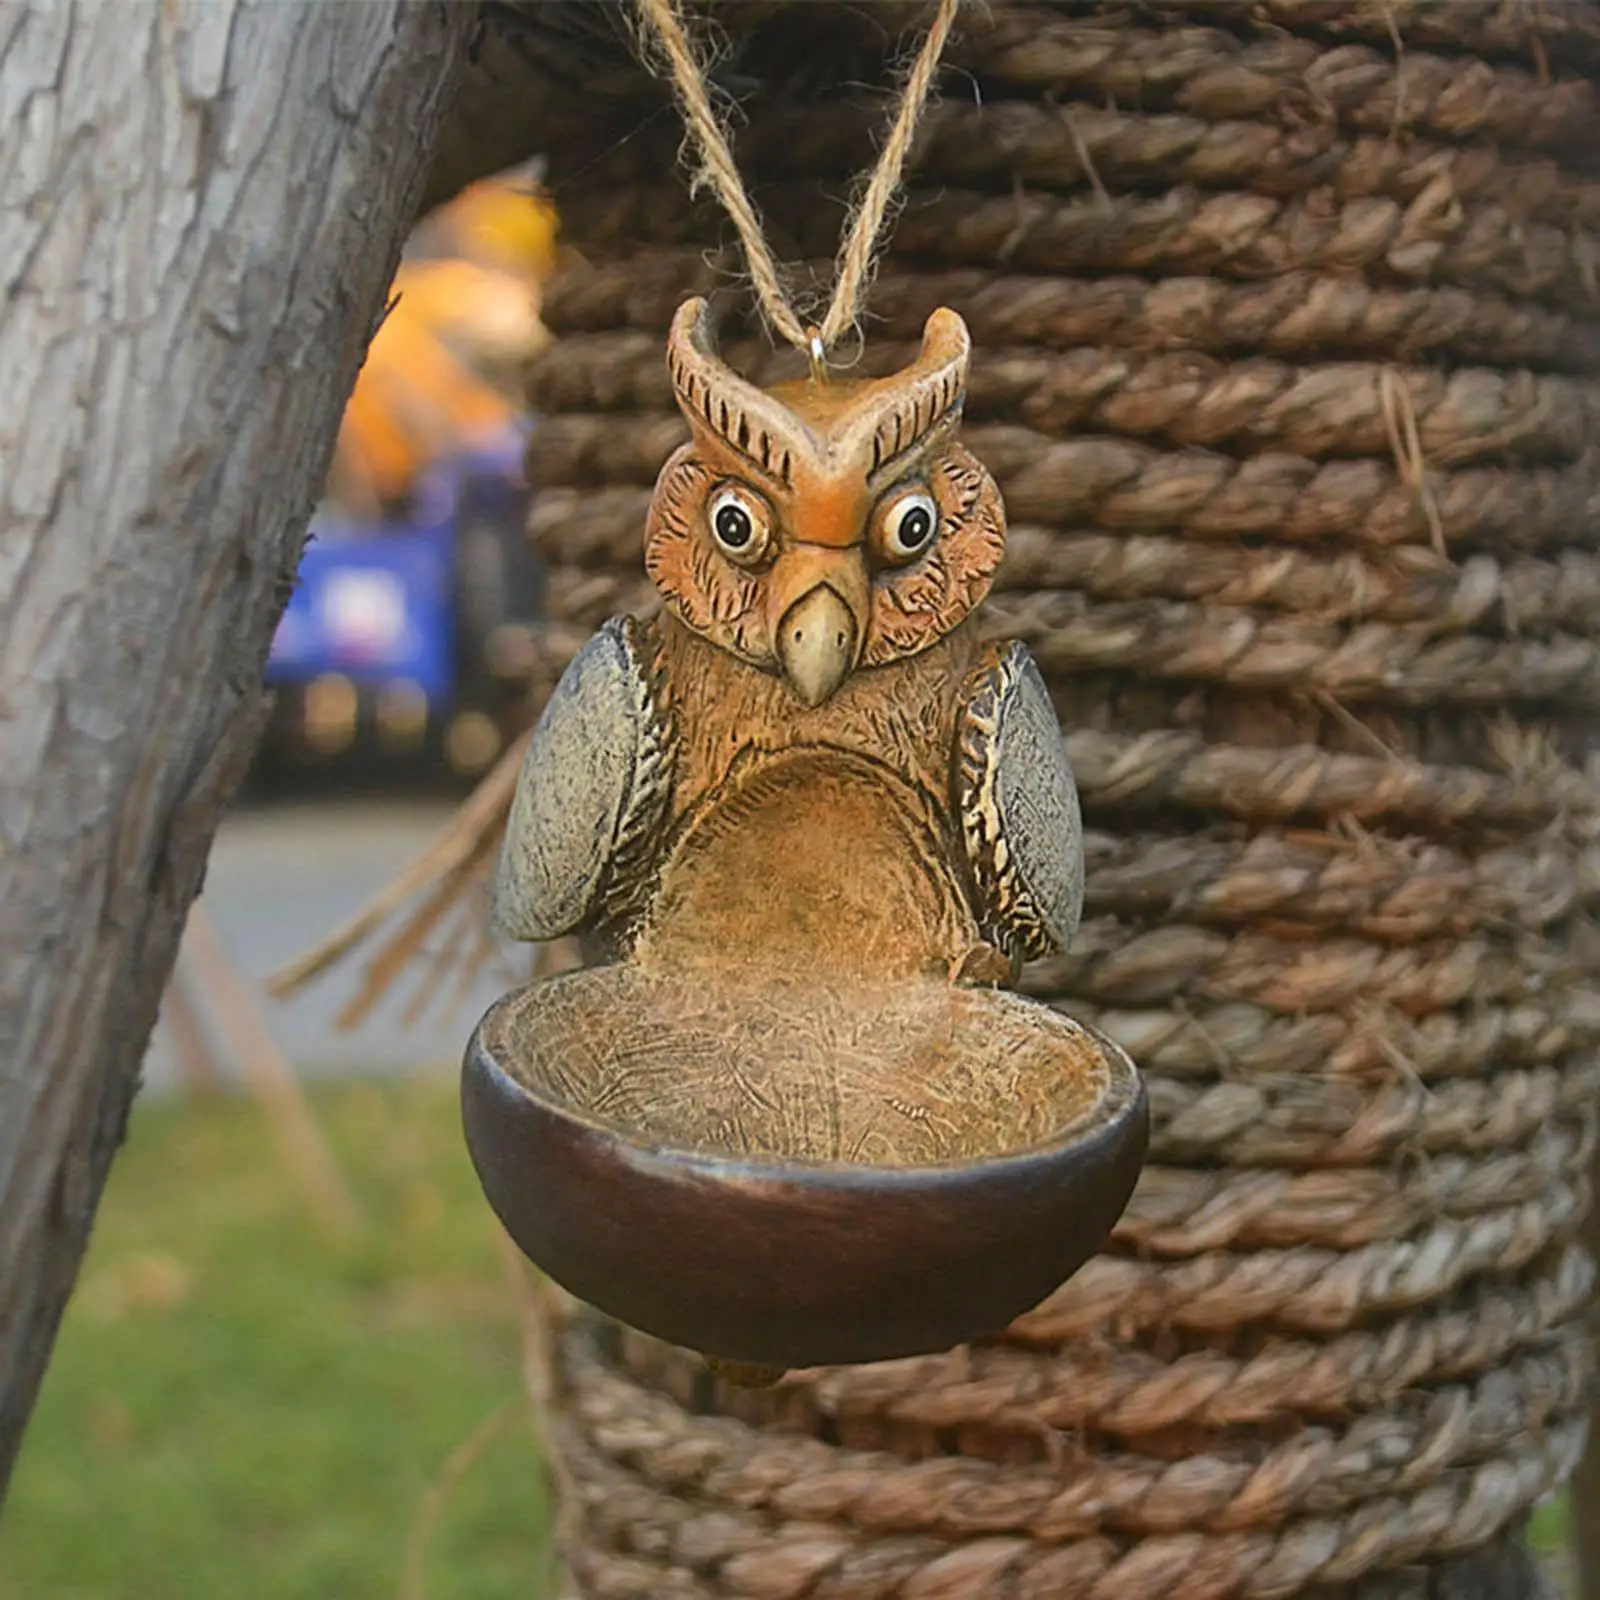 Resin Wild Bird Feeder Squirrel Proof Hanging Wildlife Feeder with Rope Owl Feeder for Patio Backyard Outdoor Garden Decor